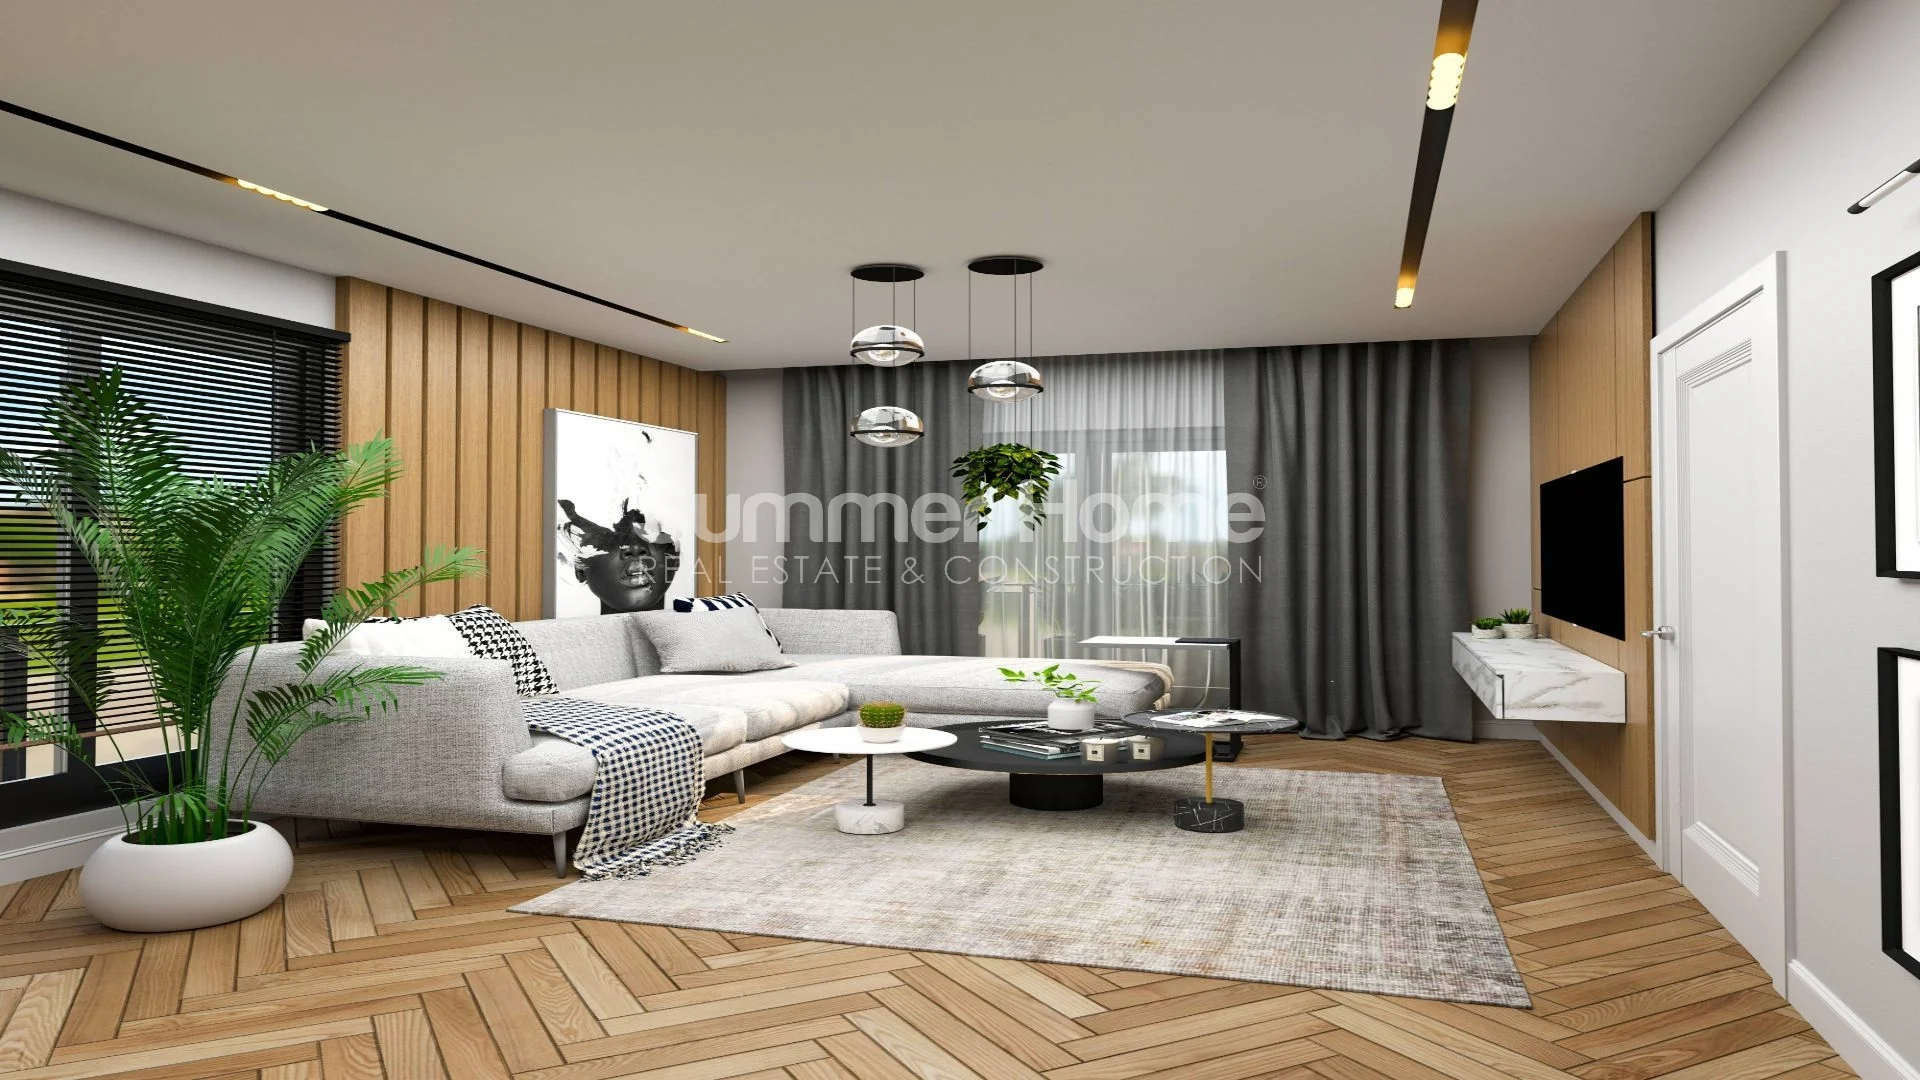 Appealing one bedroomed apartments in Mezitli, Mersin Interior - 11